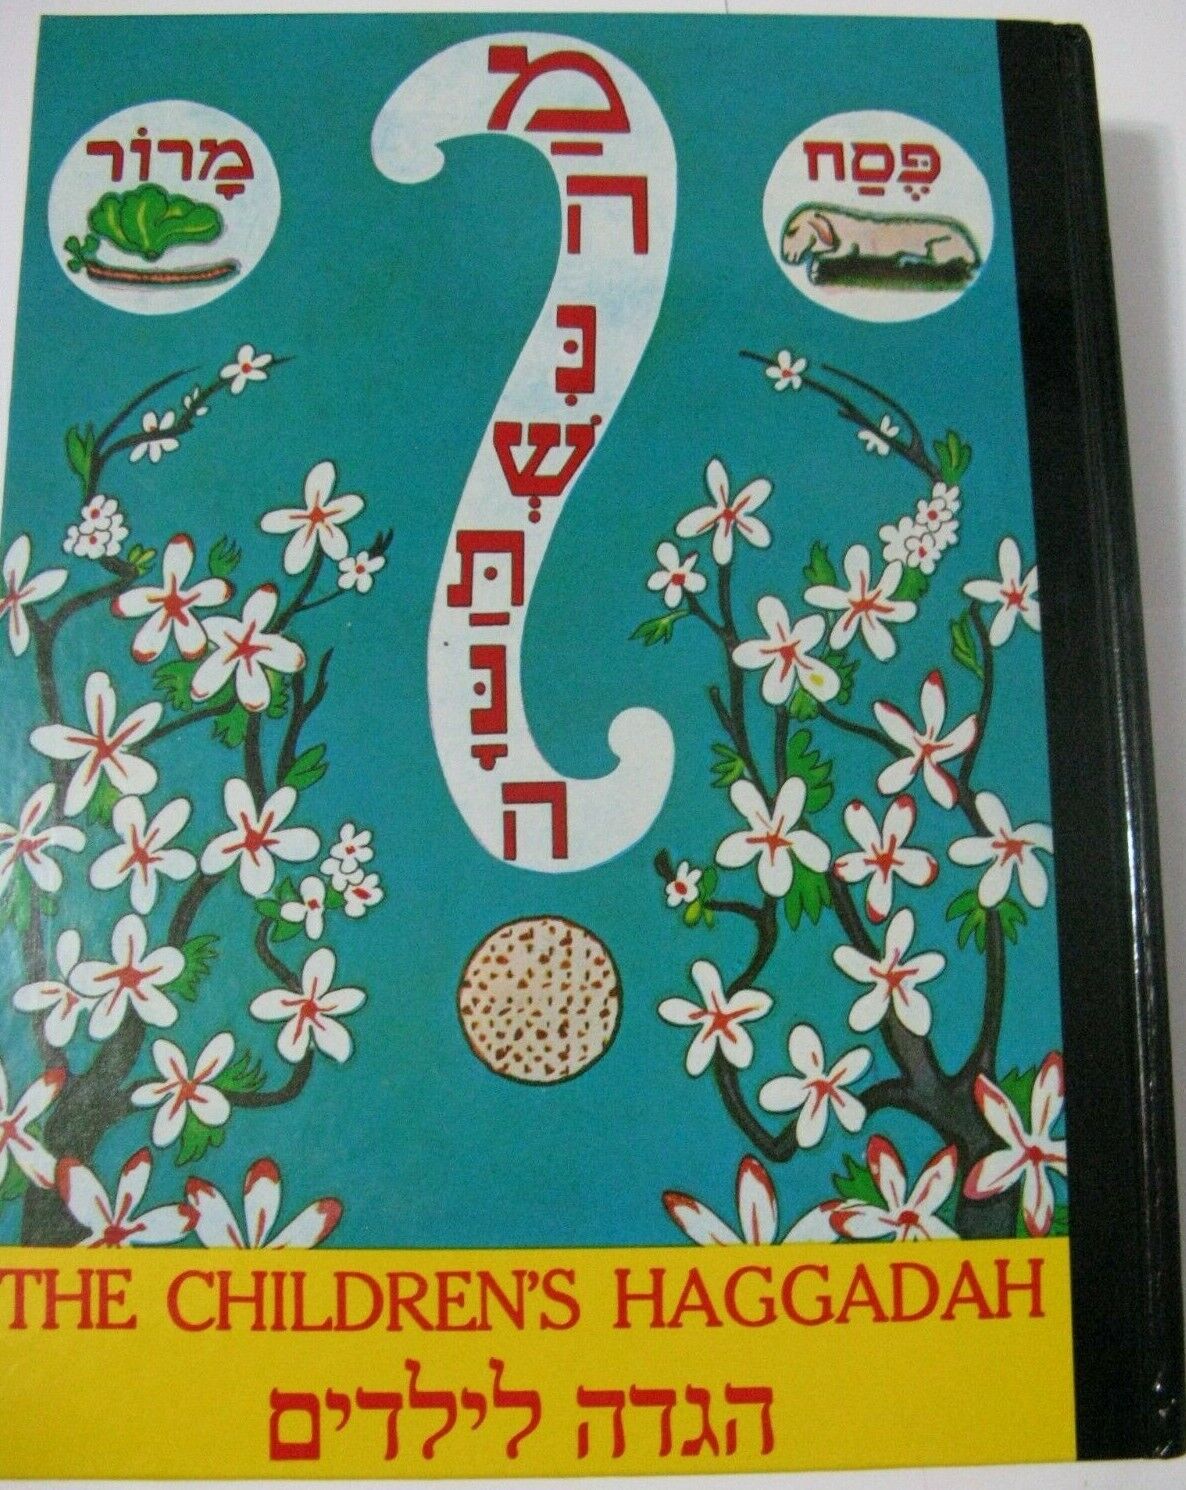 1985 The Children's Haggadah A. M. Silbermann Erwin Singer Isidore Wartski Trnsl